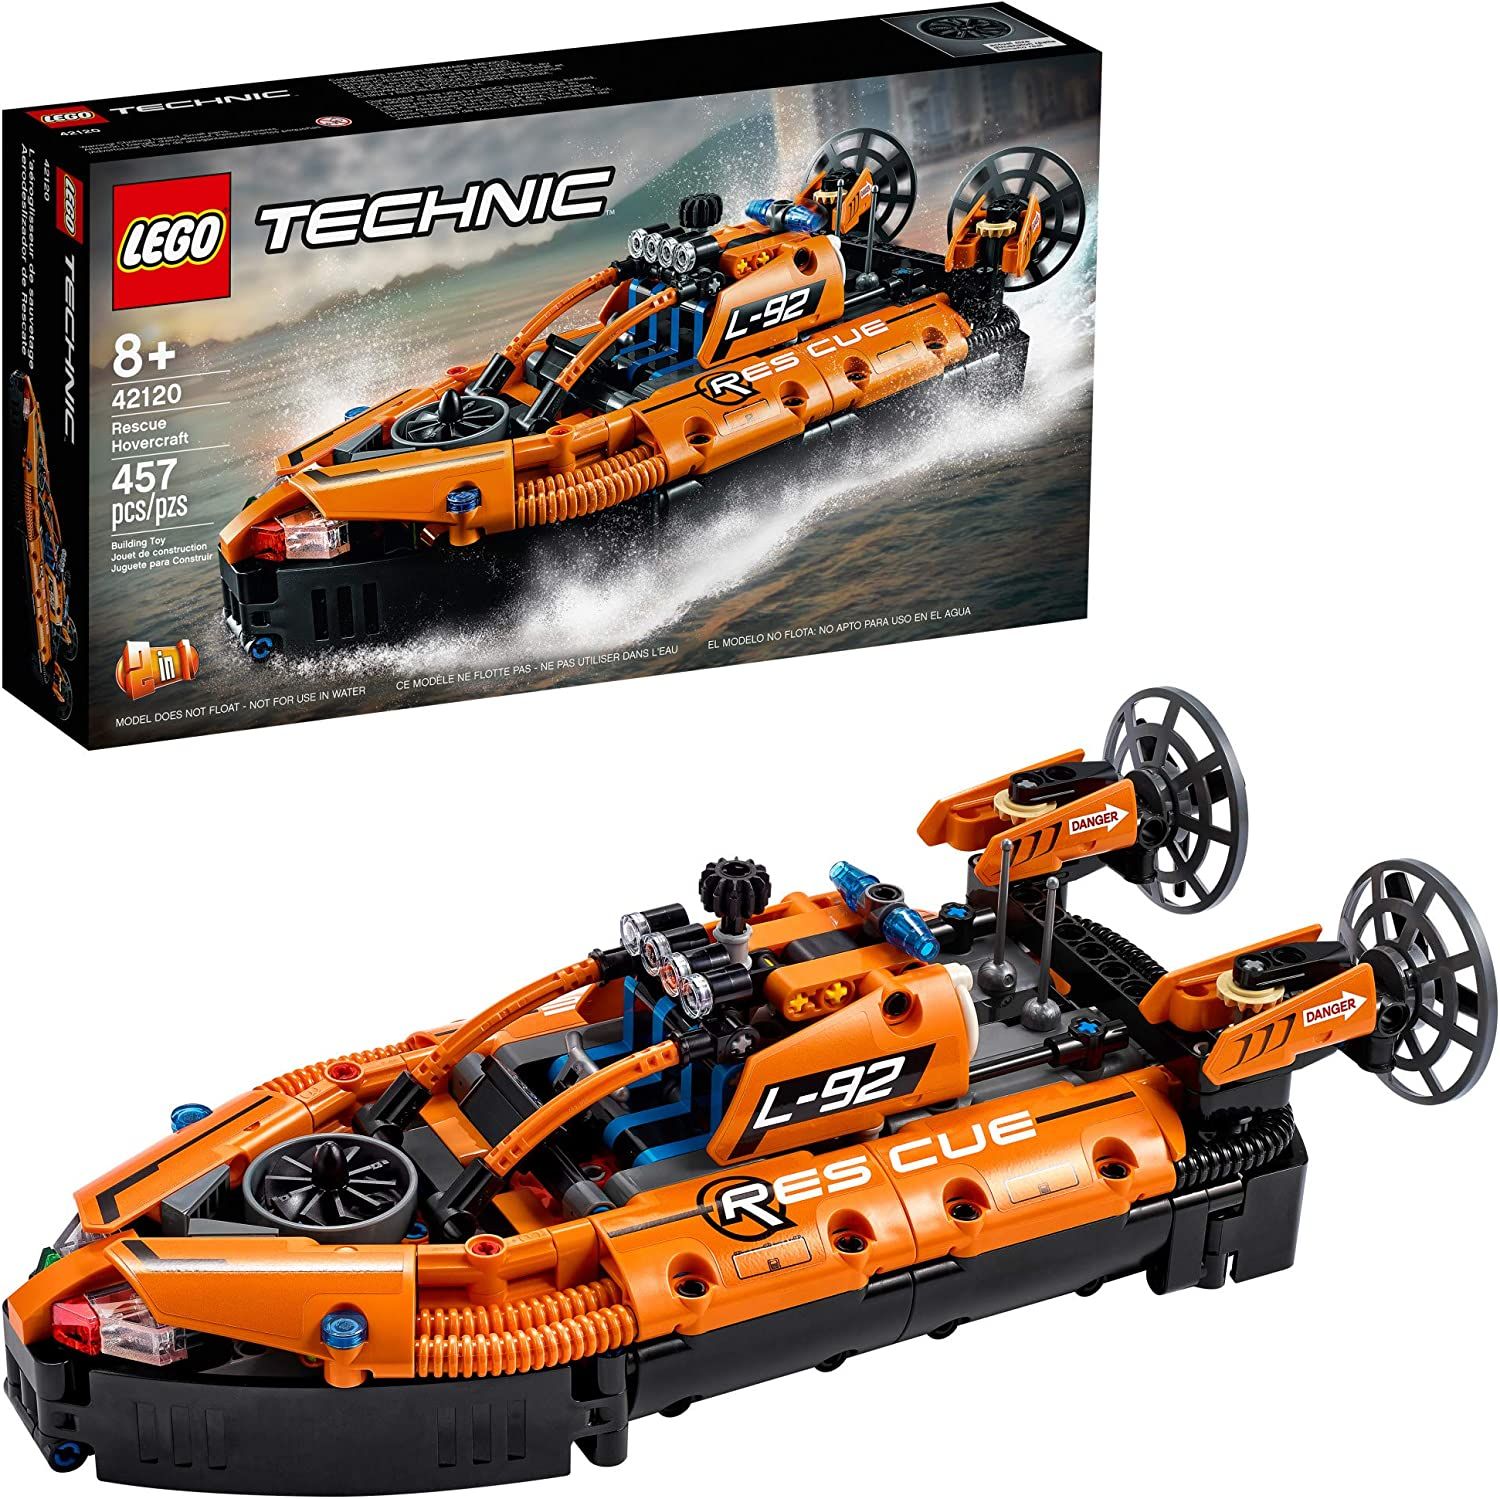 LEGO Technic Rescue Hovercraft 42120 Model Building Kit (457 Pieces) 1